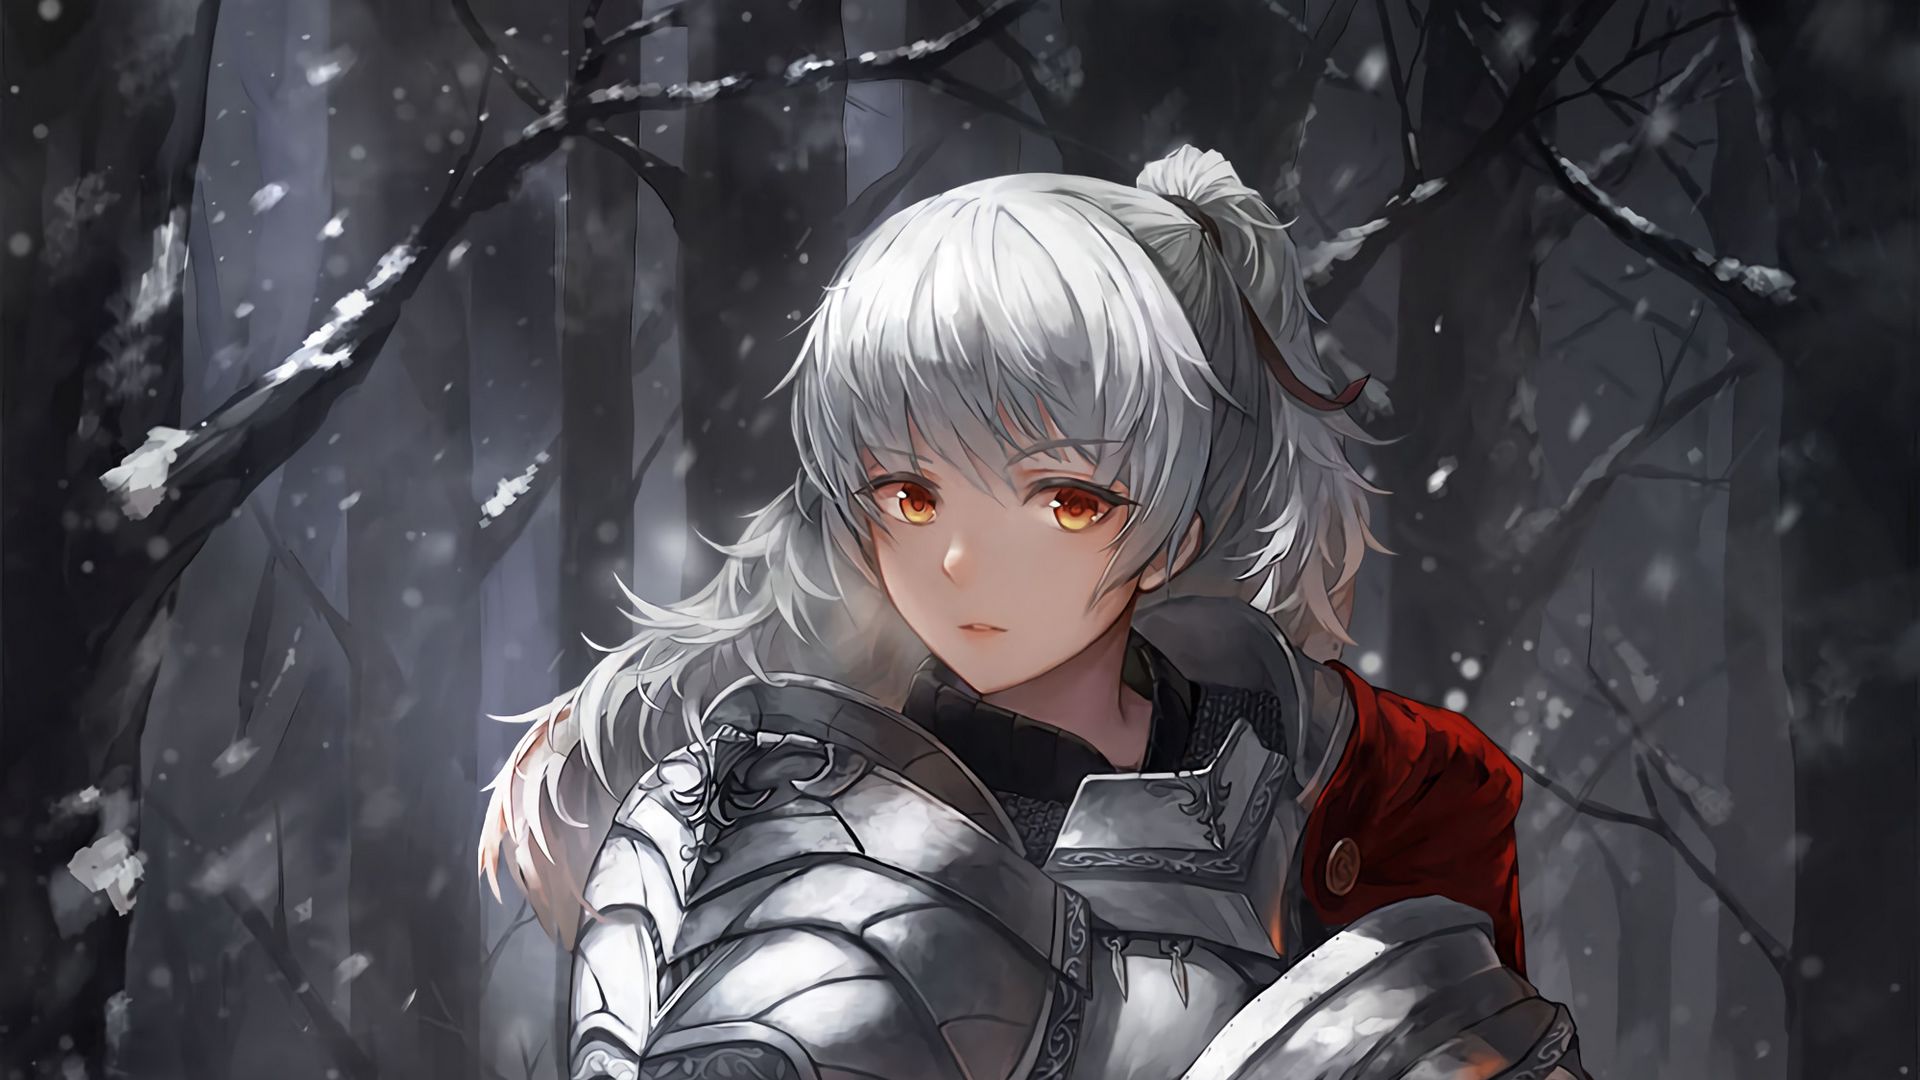 Download wallpaper 1920x1080 girl, knight, warrior, armor, sword, anime  full hd, hdtv, fhd, 1080p hd background